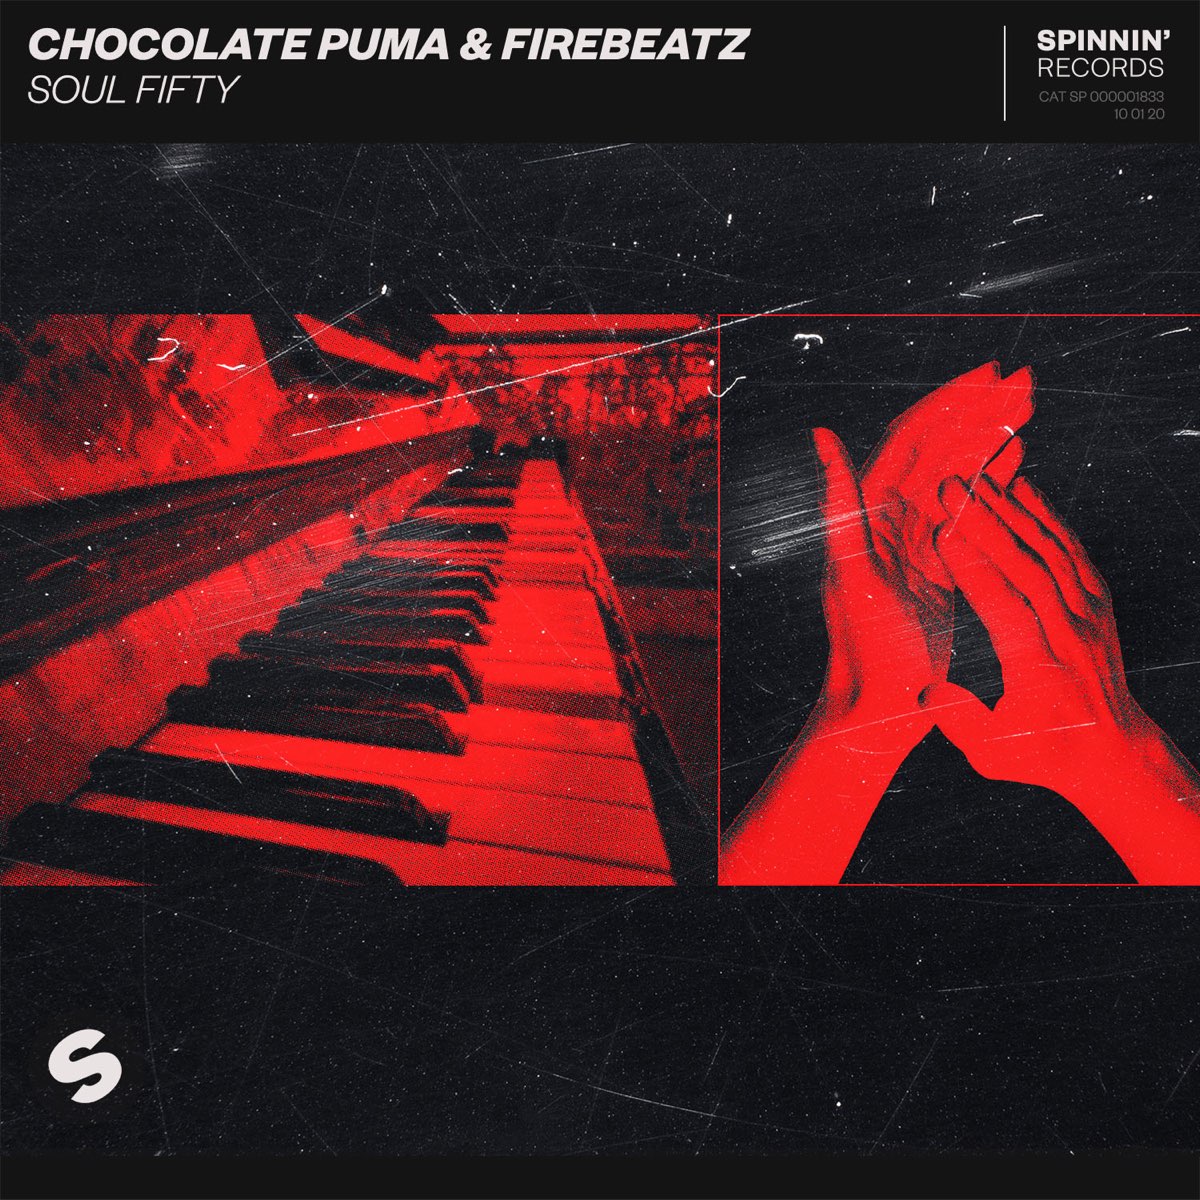 Validación temerario empeorar Soul Fifty - Single de Chocolate Puma & Firebeatz en iTunes